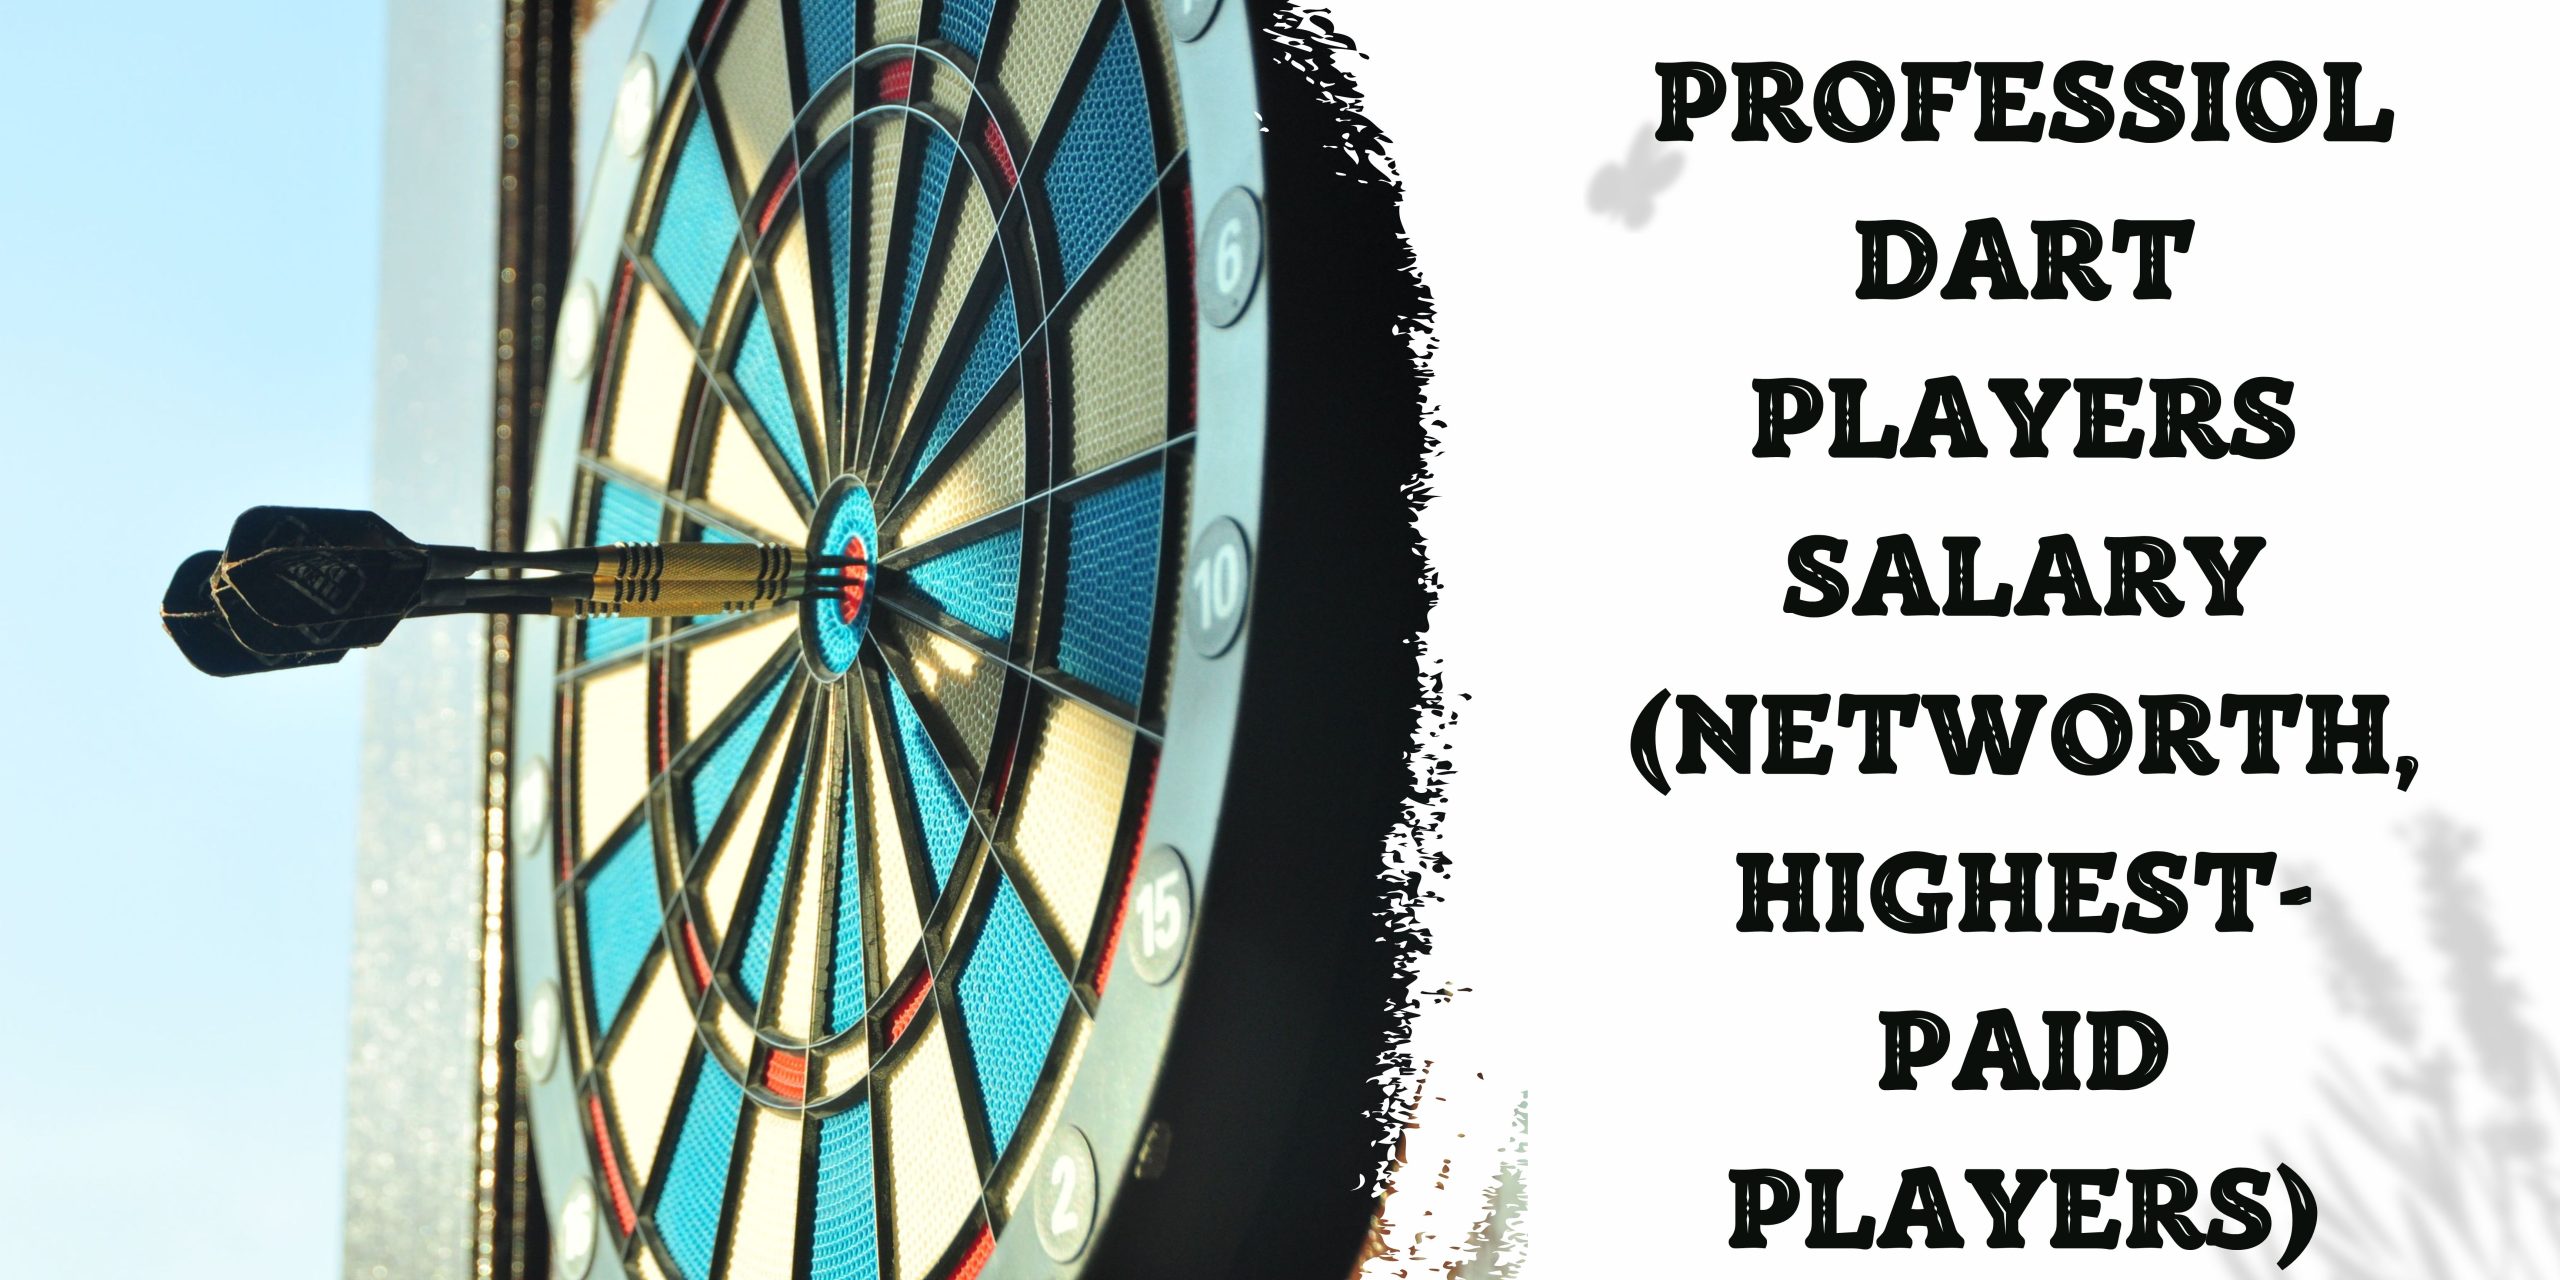 Professional dart players salary